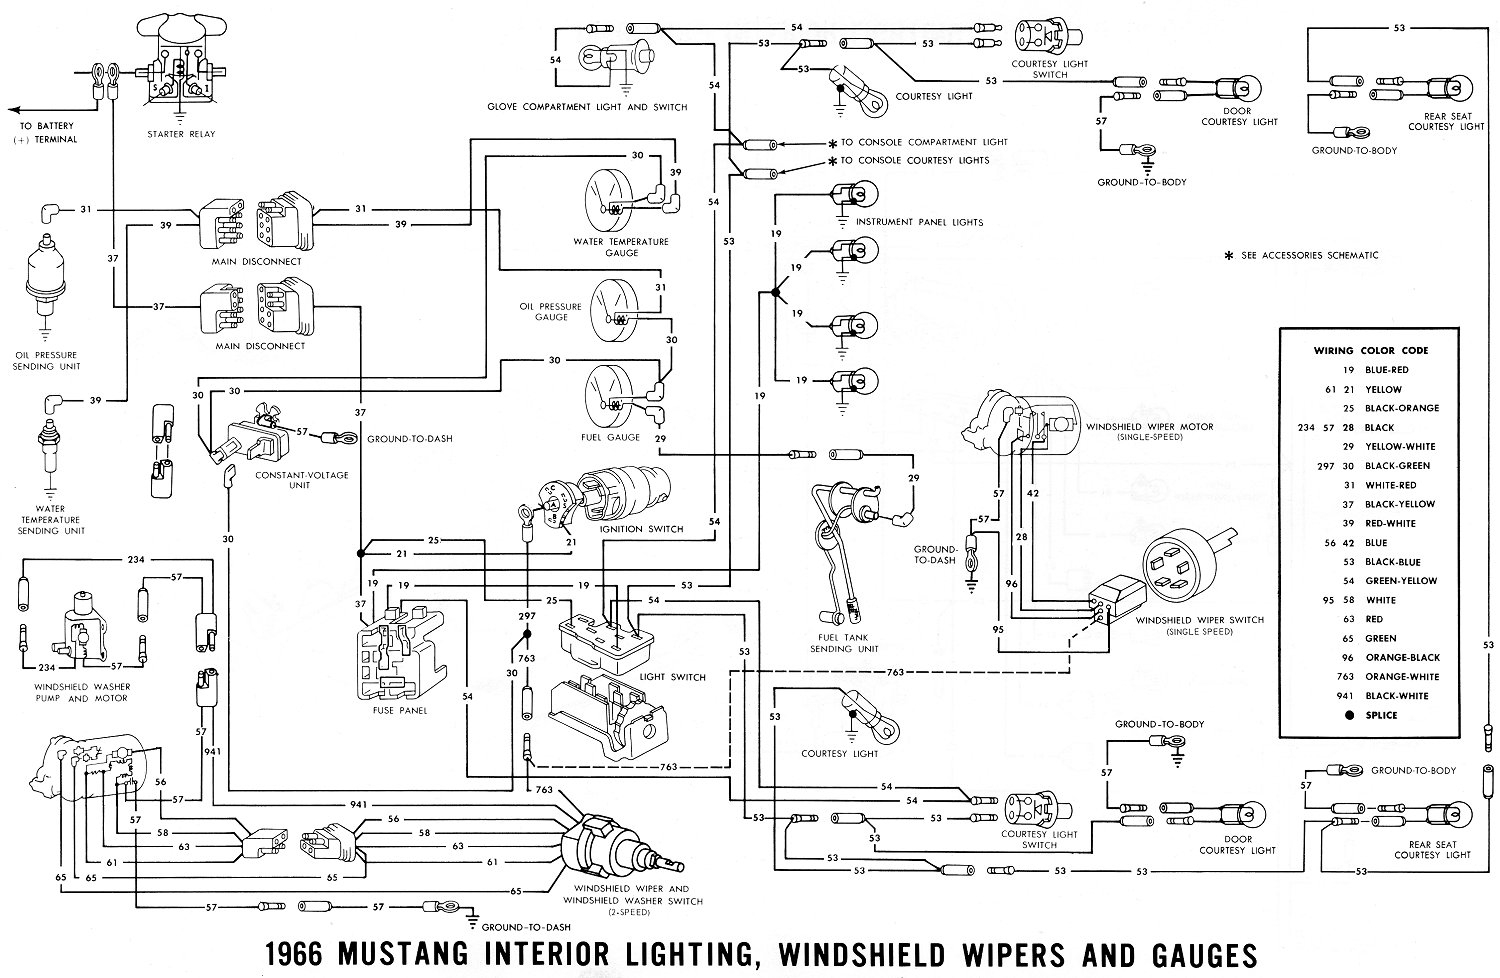 Aftermarket Amp Gauge Wiring Diagram 4 | Wiring Diagram - Amp Gauge Wiring Diagram